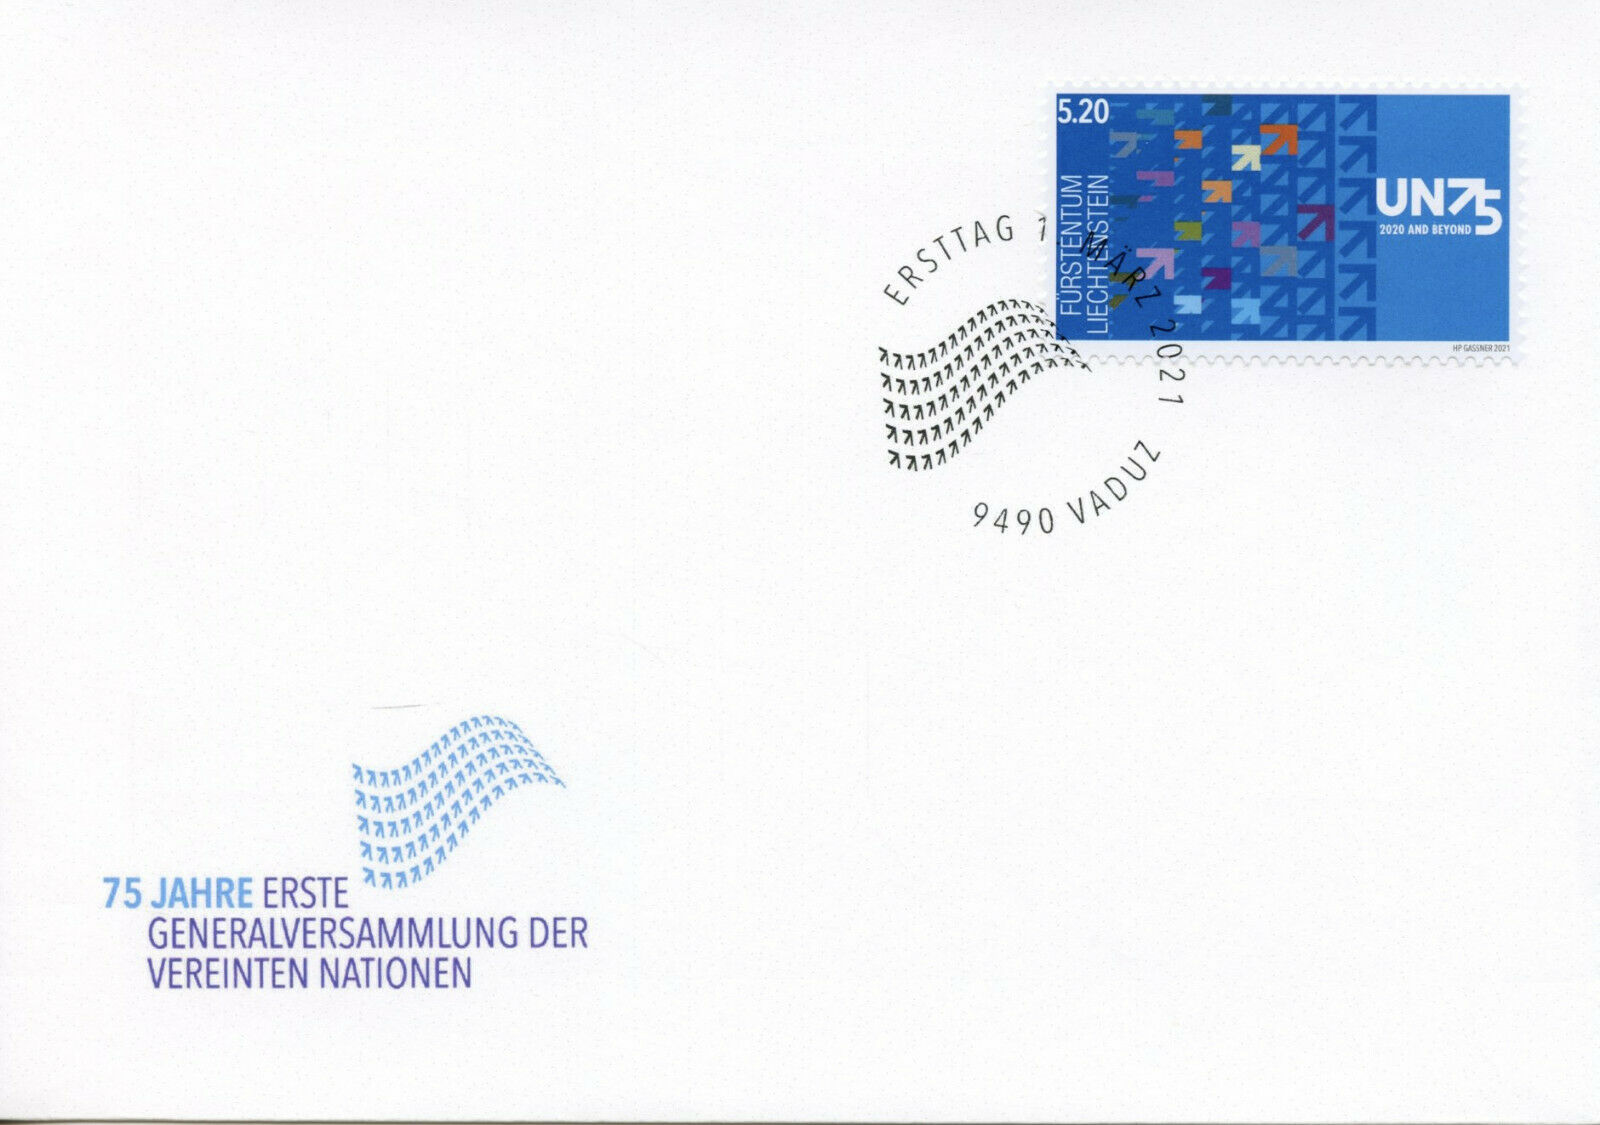 Liechtenstein UN Stamps 2021 FDC 1st General Assembly United Nations UN75 1v Set